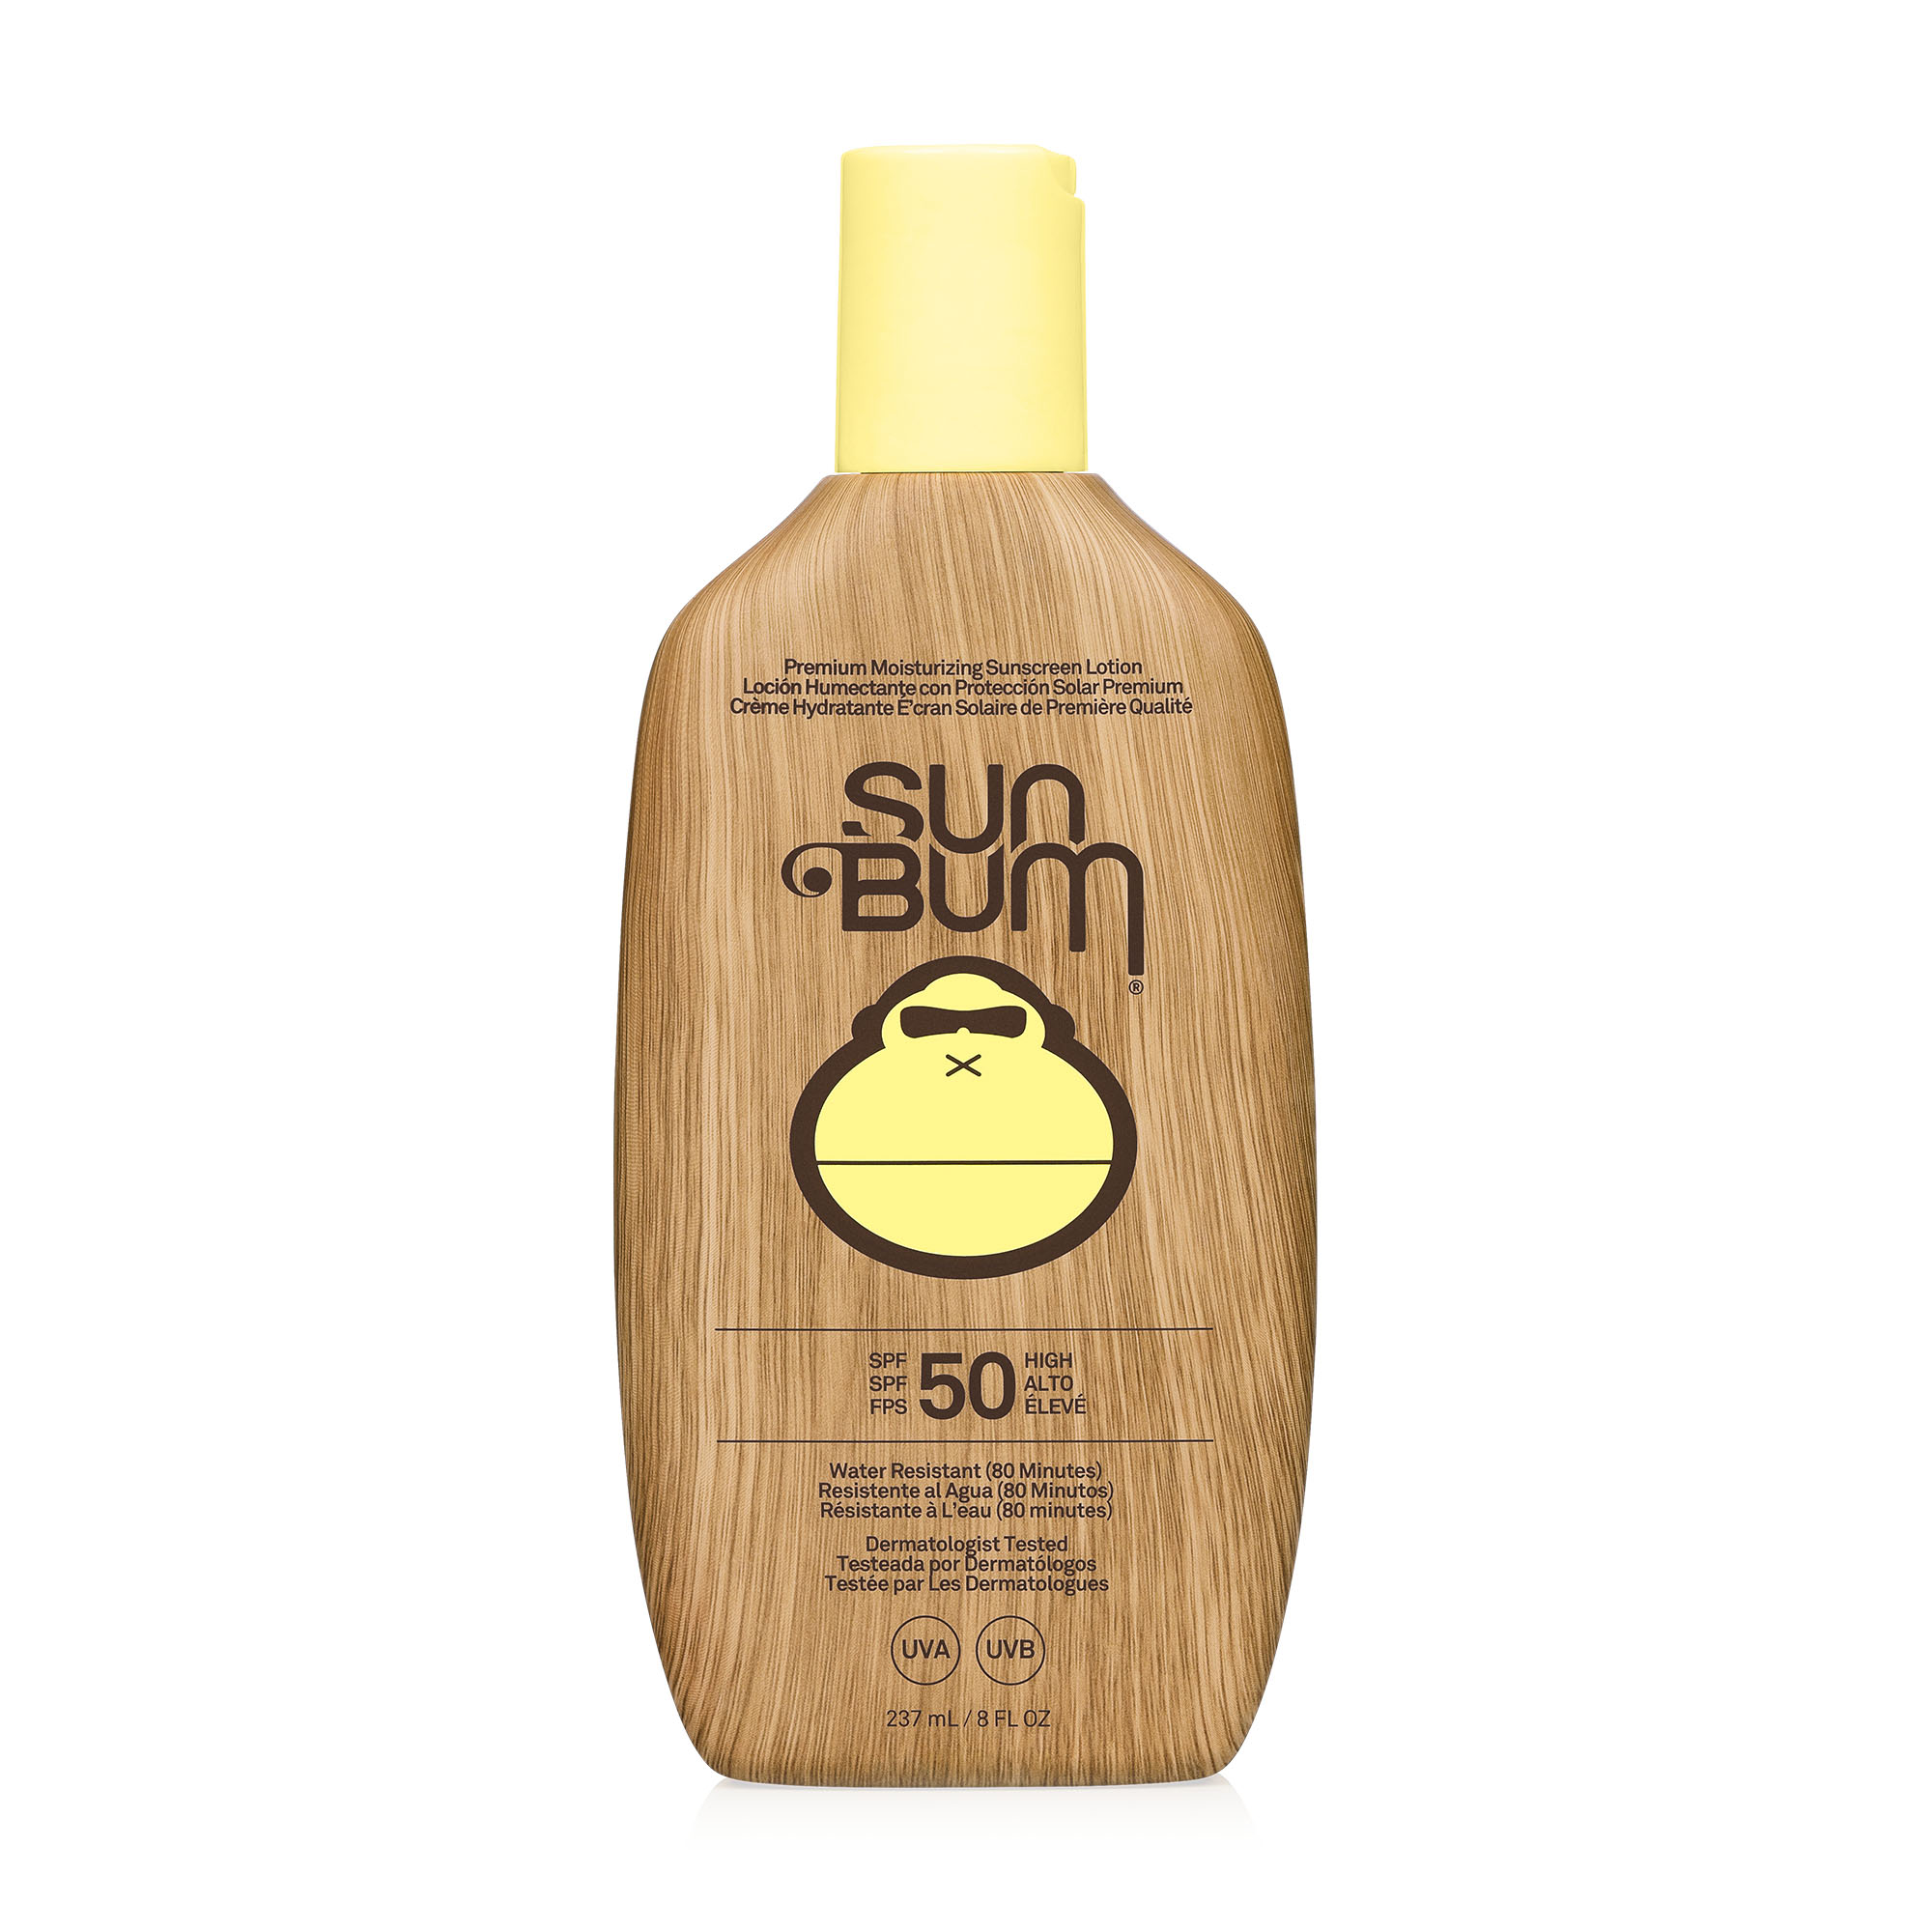 SUNBUM SUN BUM SPF 50 Clear Face Sunscreen Lotion